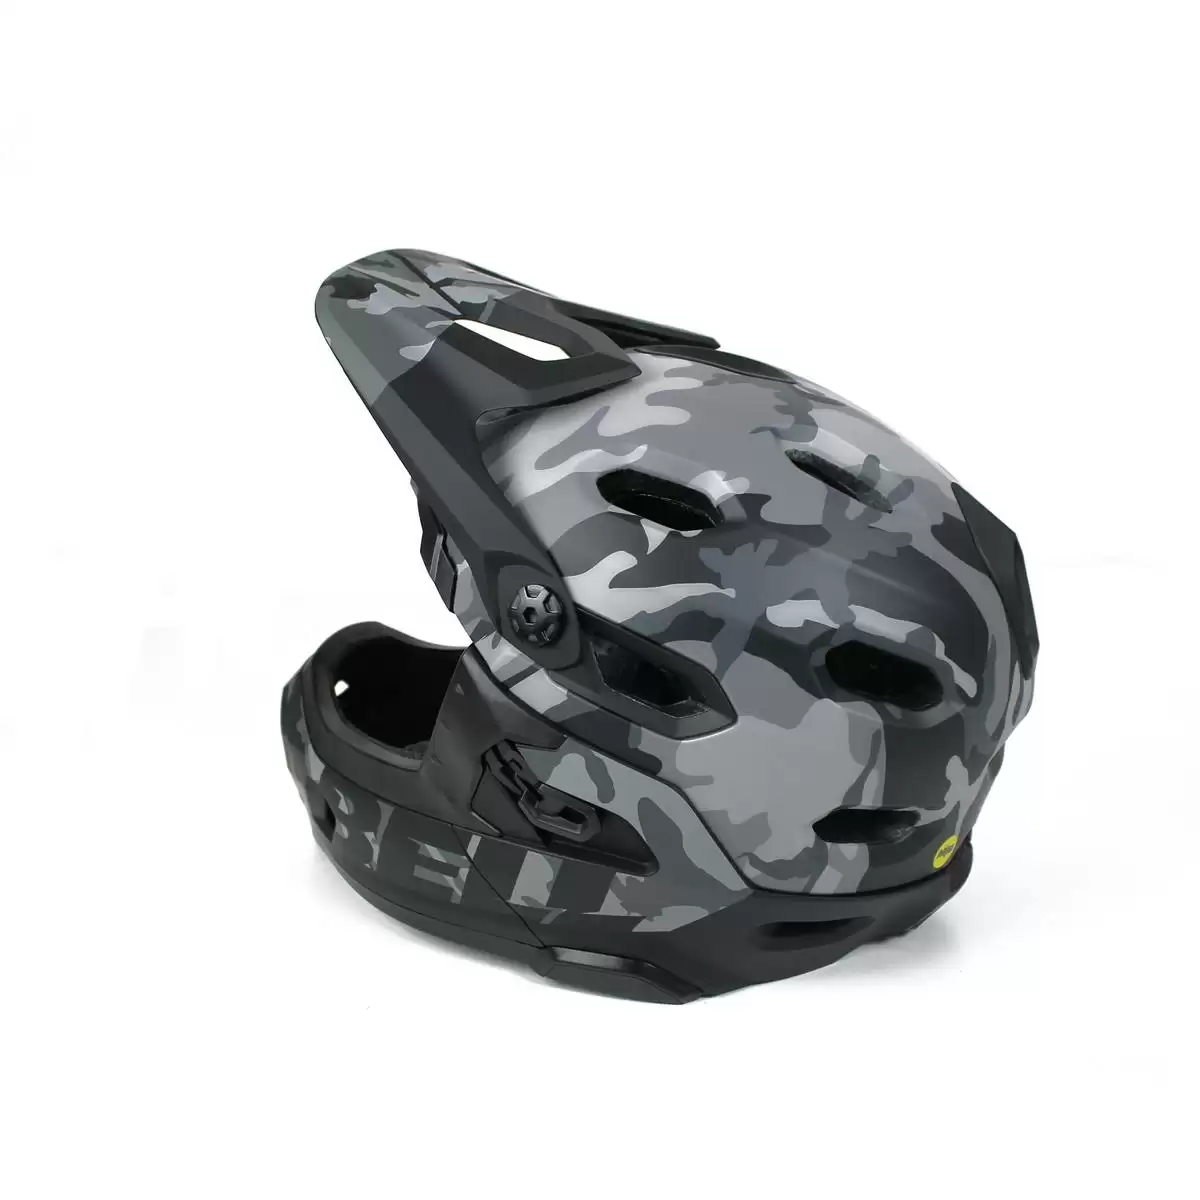 Helmet Super DH MIPS Black Camo Size L (59-62cm) #6